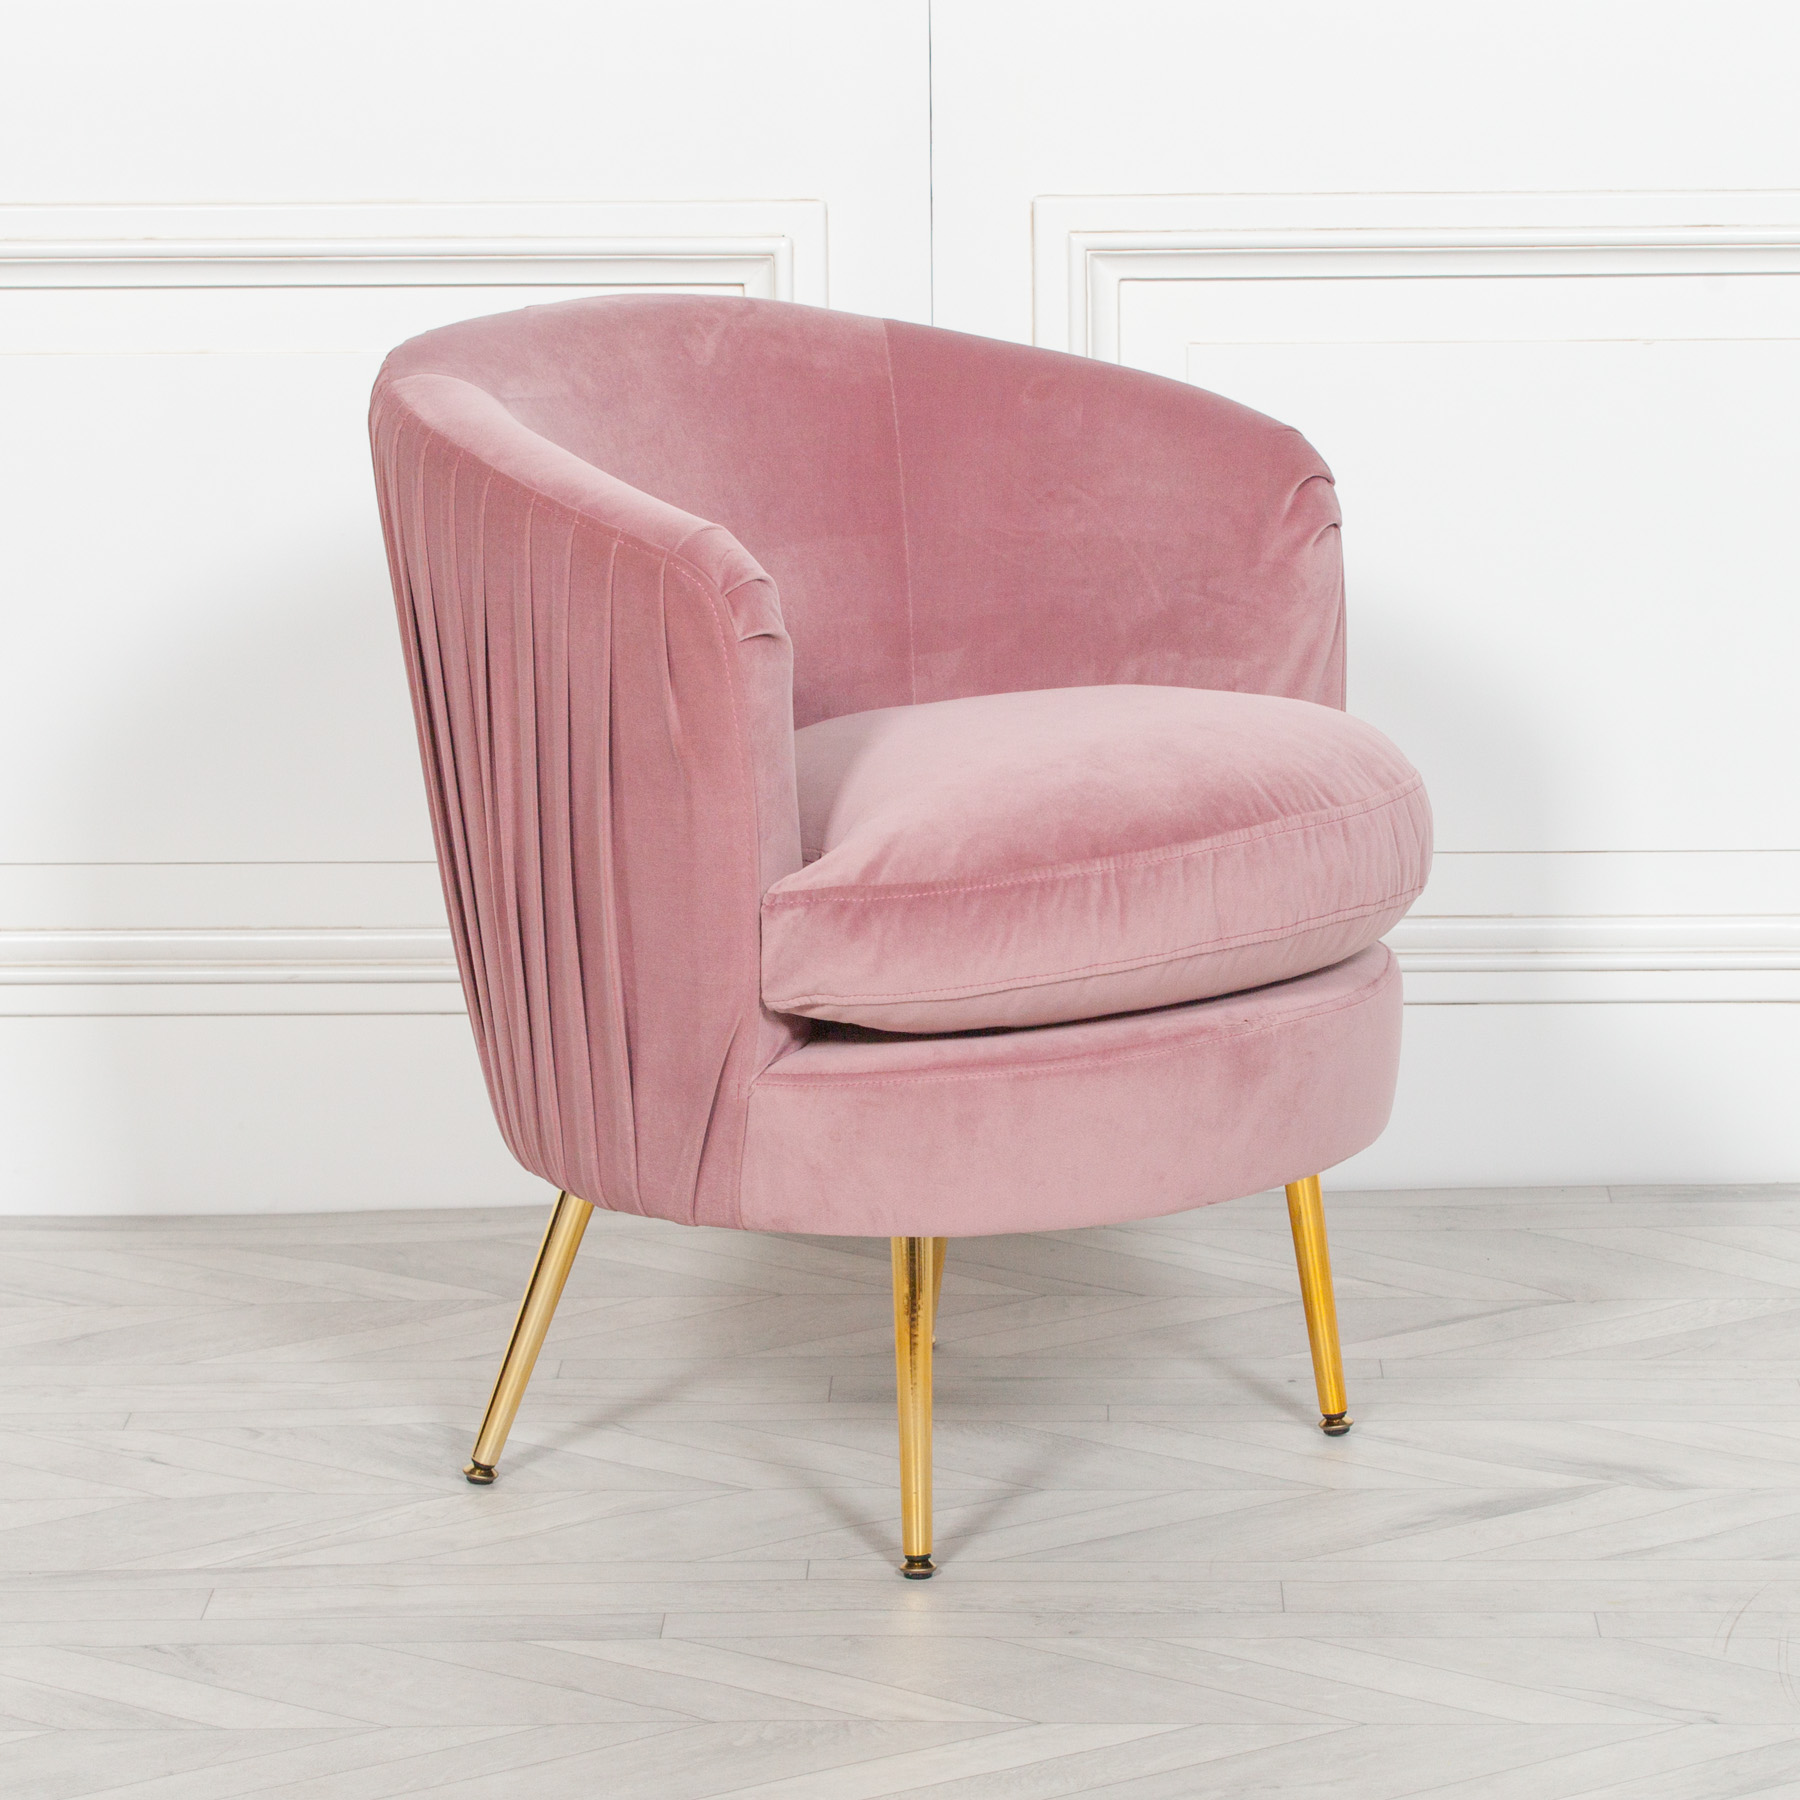 Grey Bedroom Chair - Chair Design